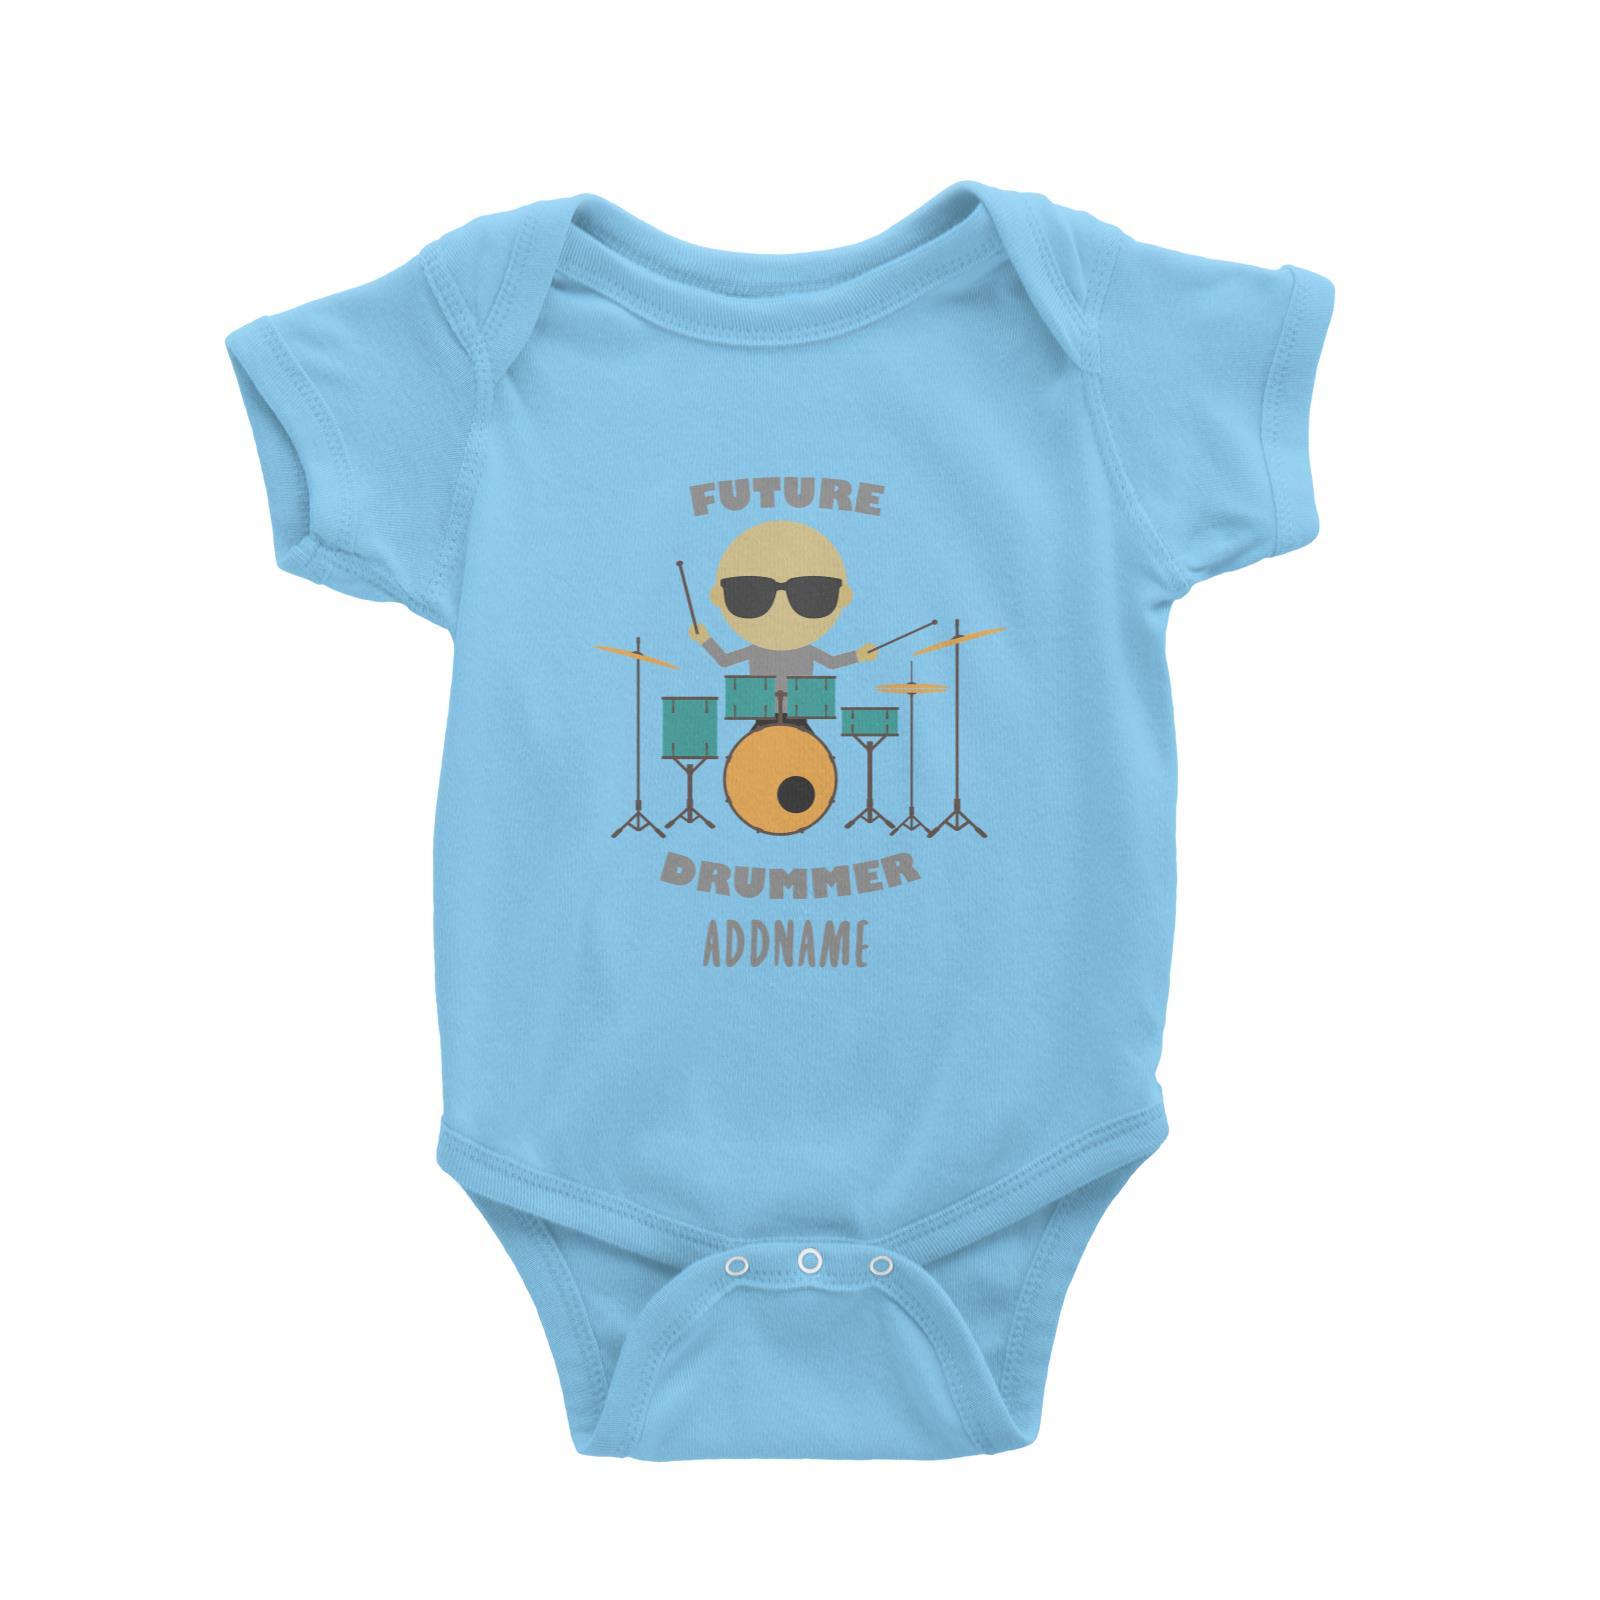 Future Drummer Addname Baby Romper Personalizable Designs Basic Newborn